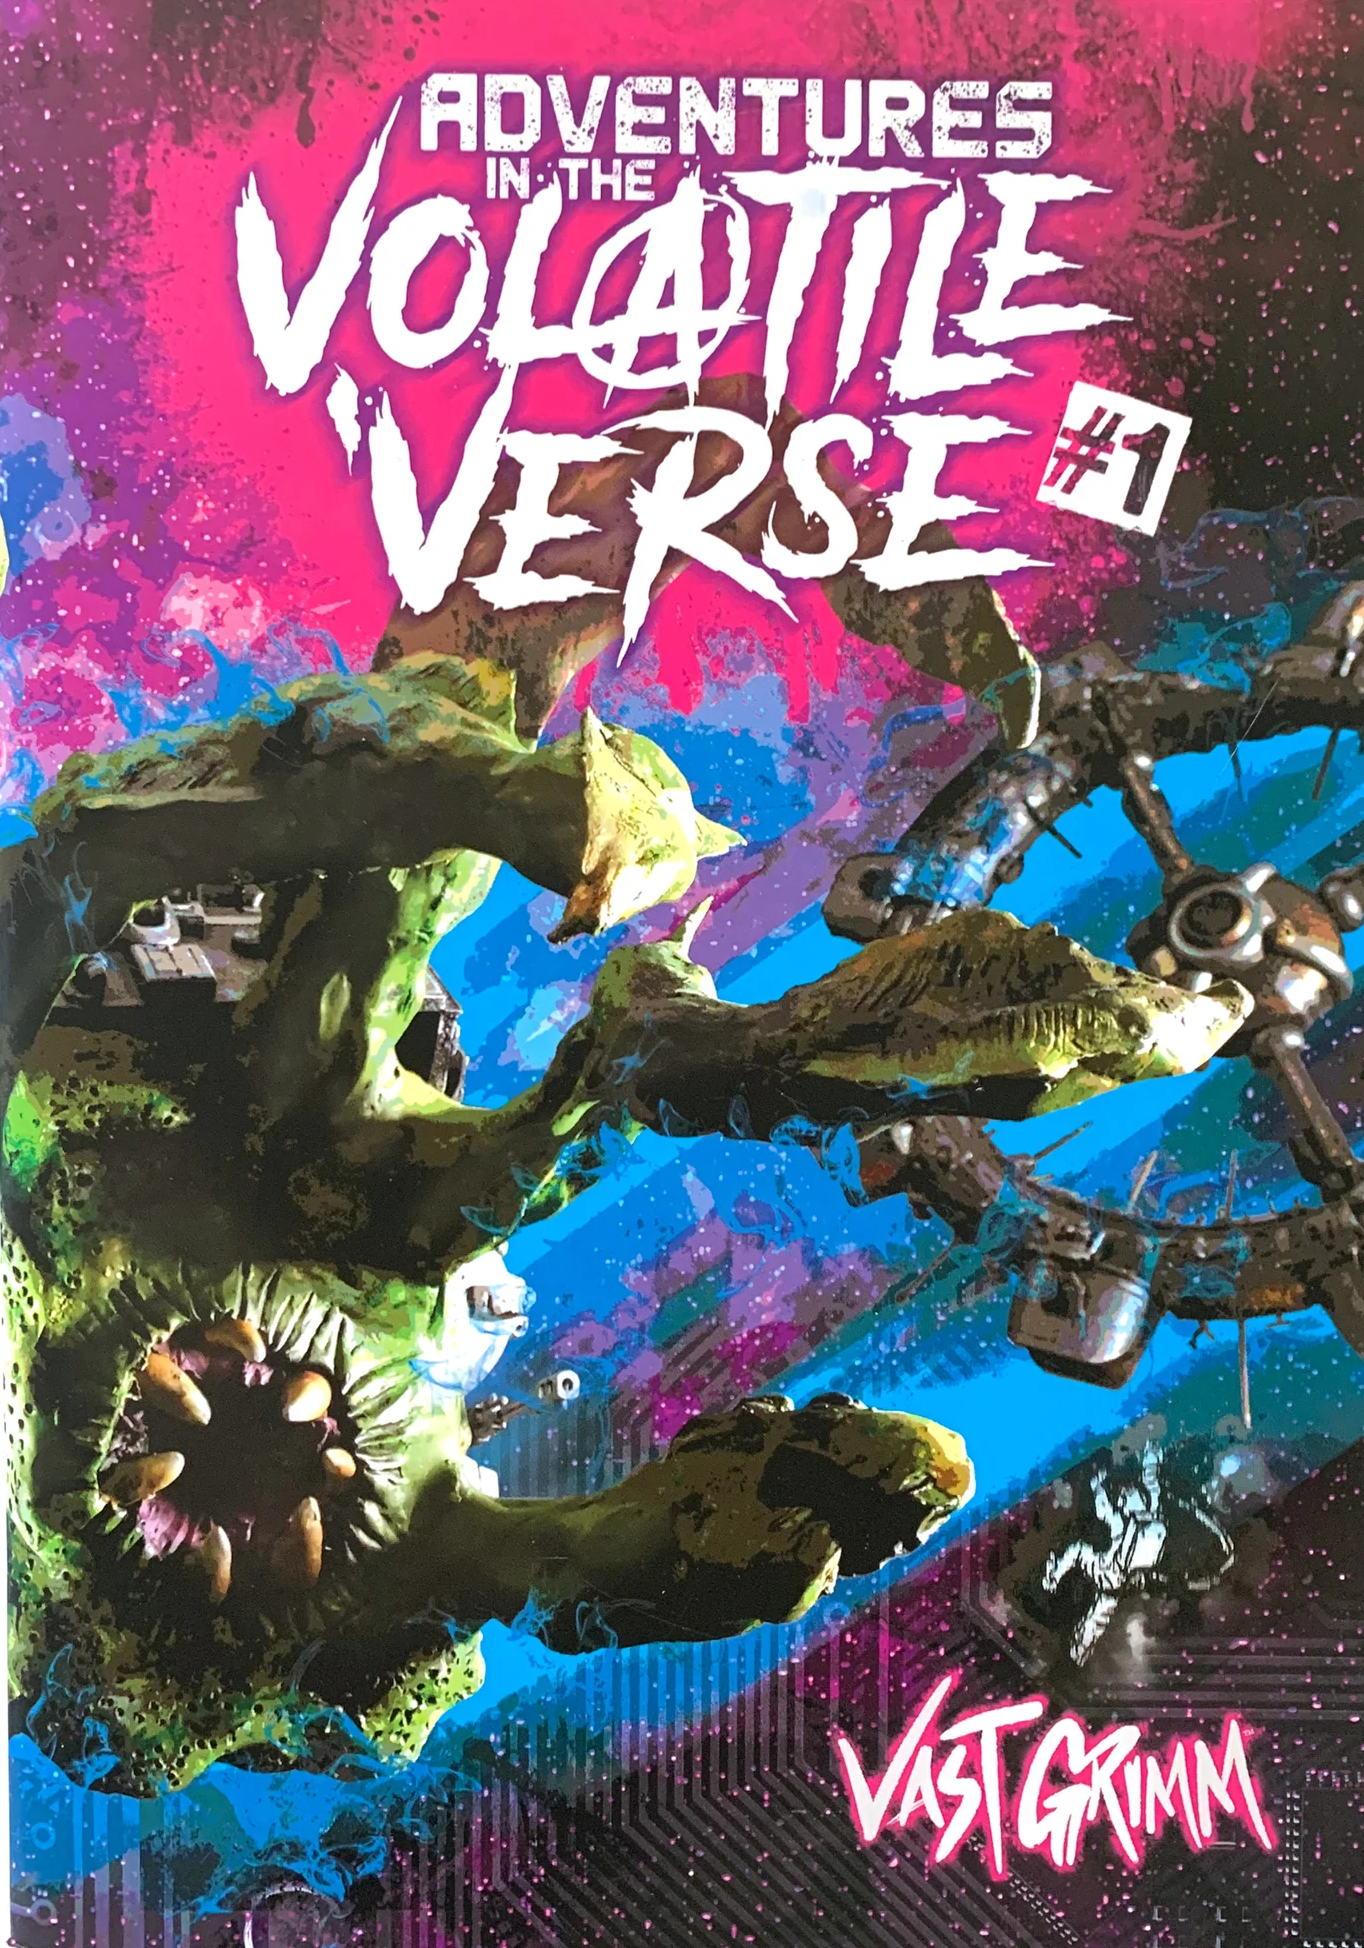 Vast Grimm: Volatile Verse 1 Adventure Zine 